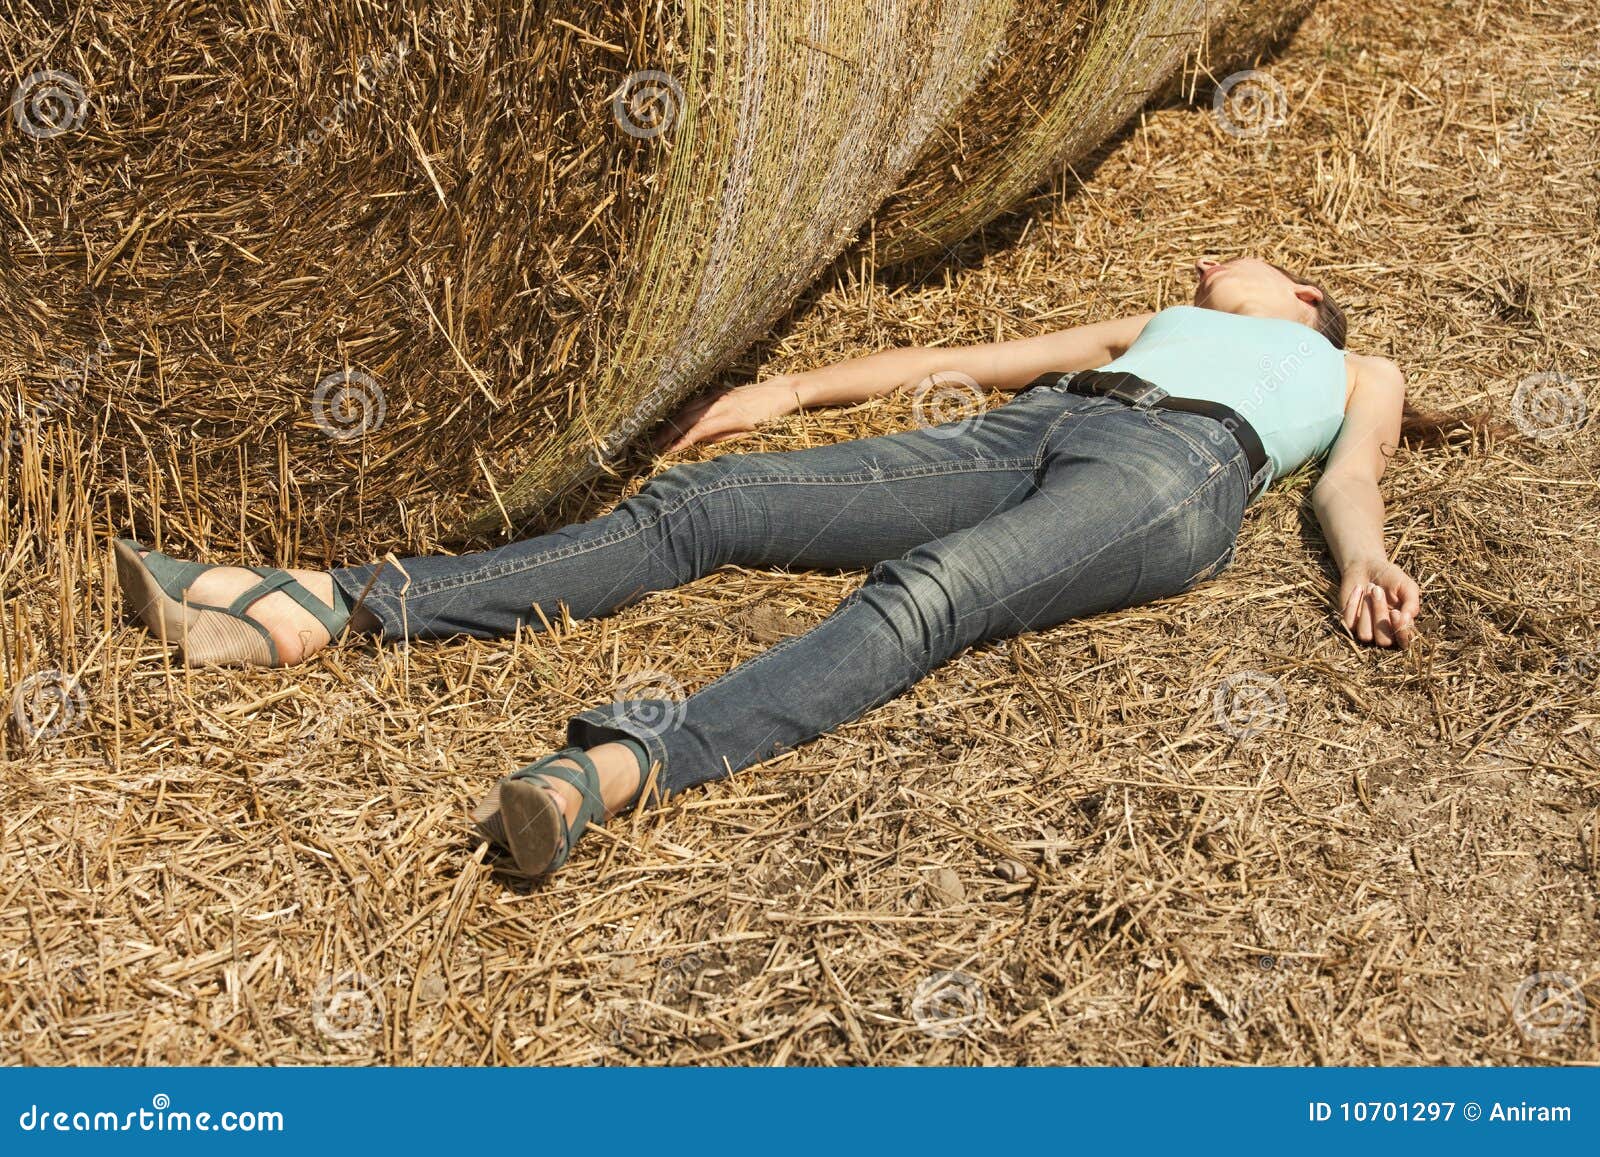 [Image: woman-unconscious-field-10701297.jpg]